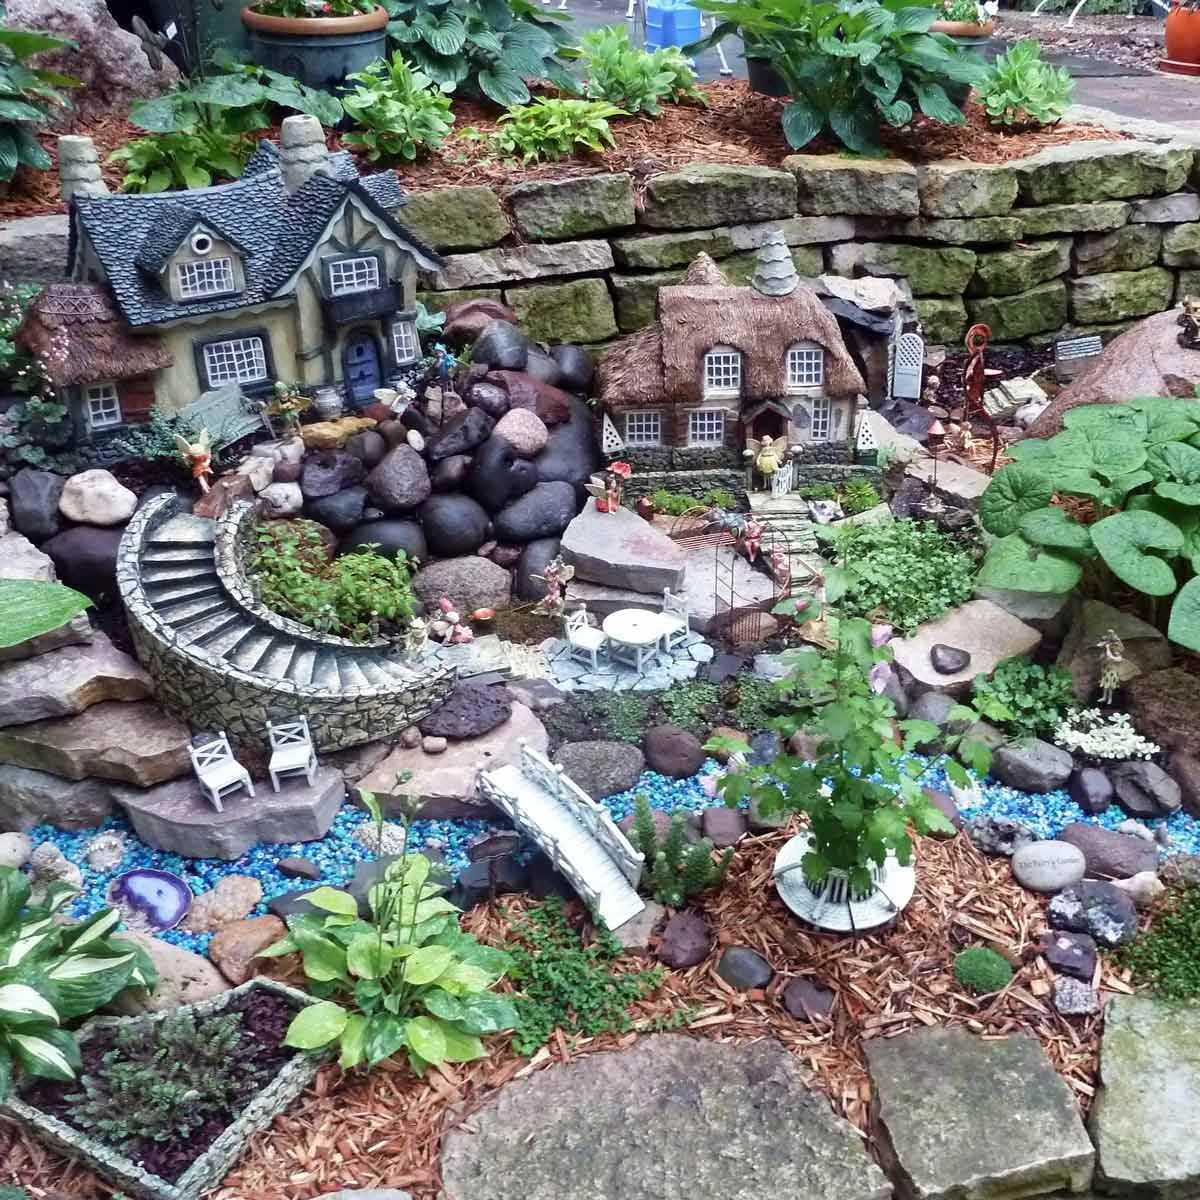 diy miniature garden house